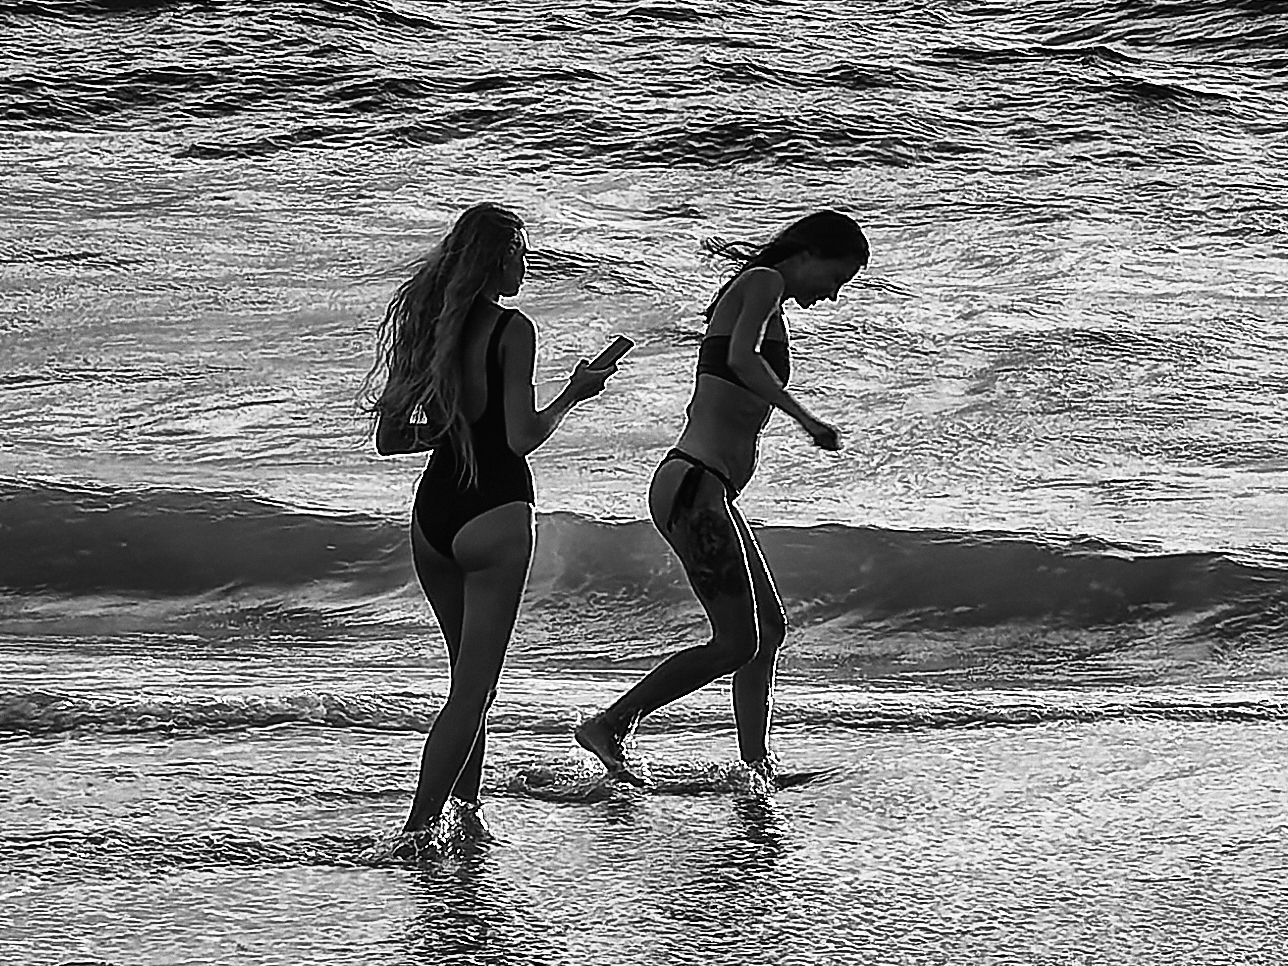 Girls on the beach...